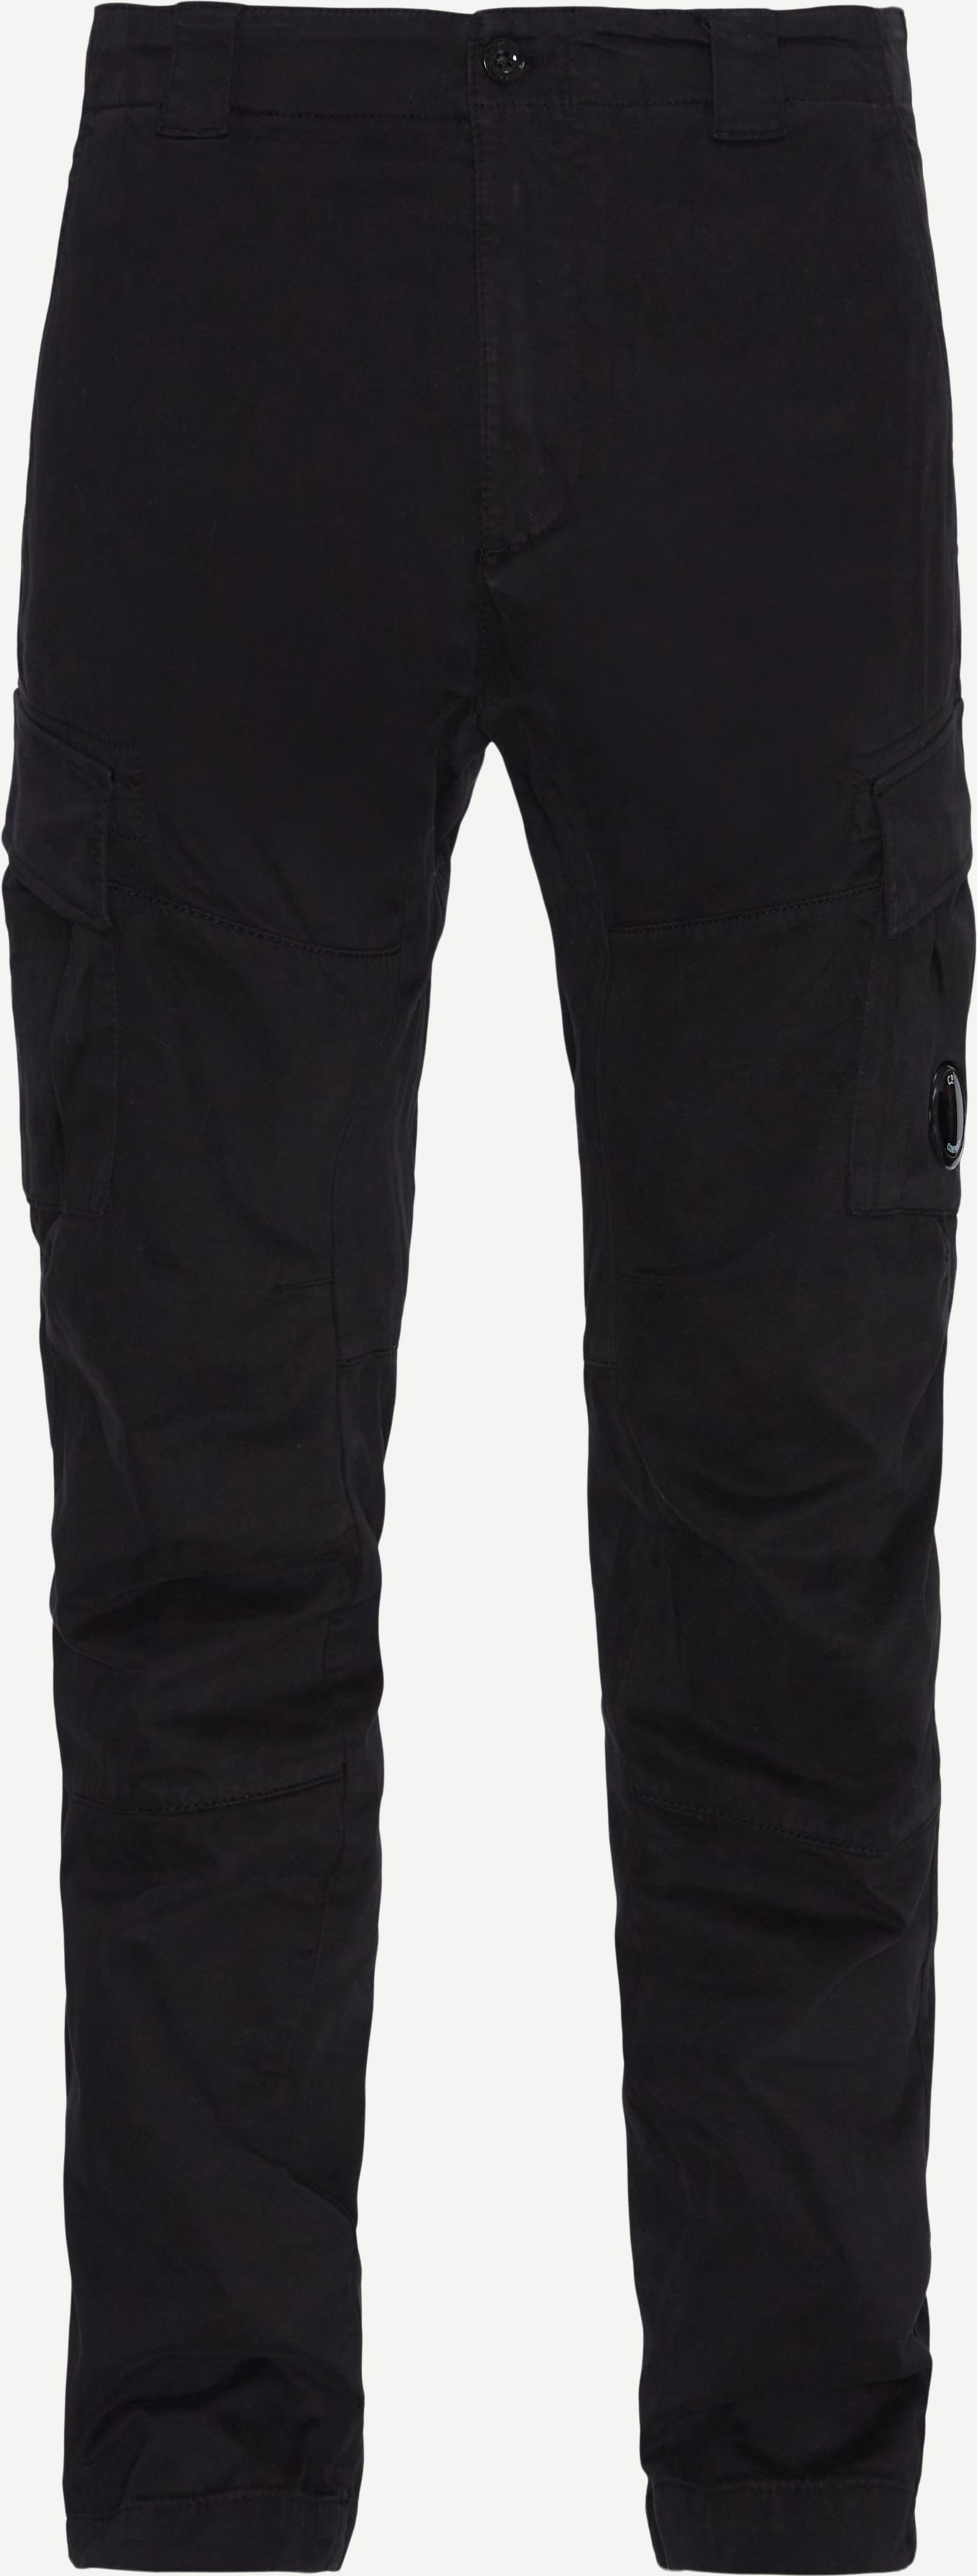 C.P. Company Trousers PA056A 005694G Black